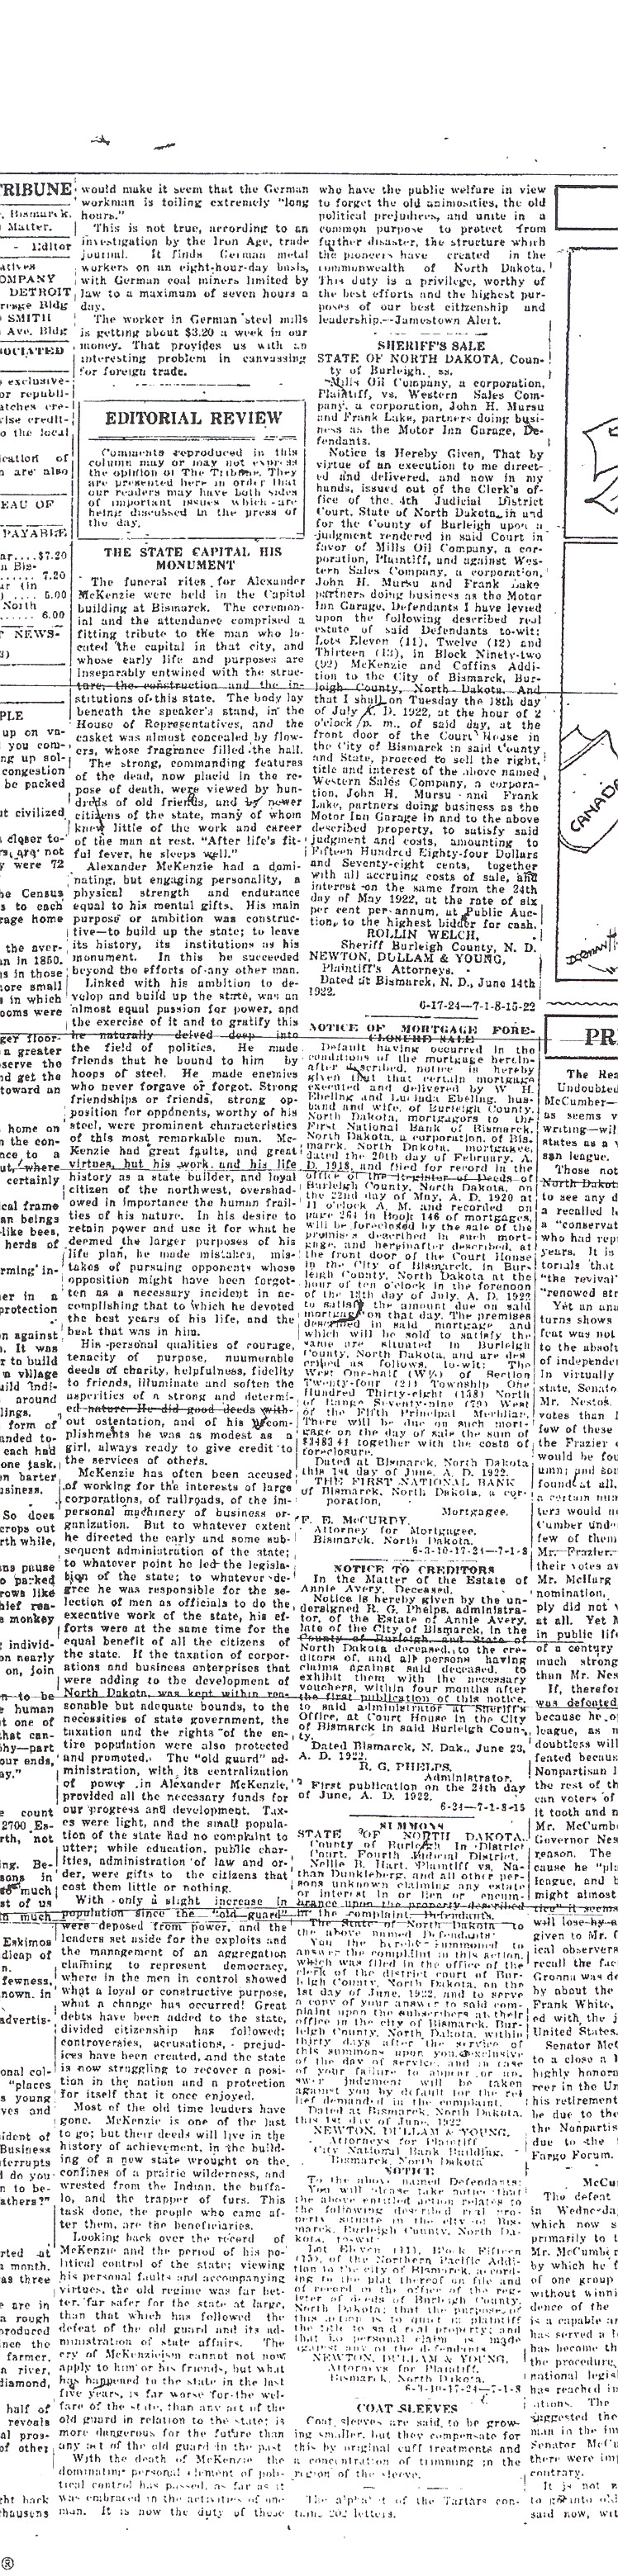 Alex McKenzie Obituary from the Bismarck Tribune, July 1, 1922